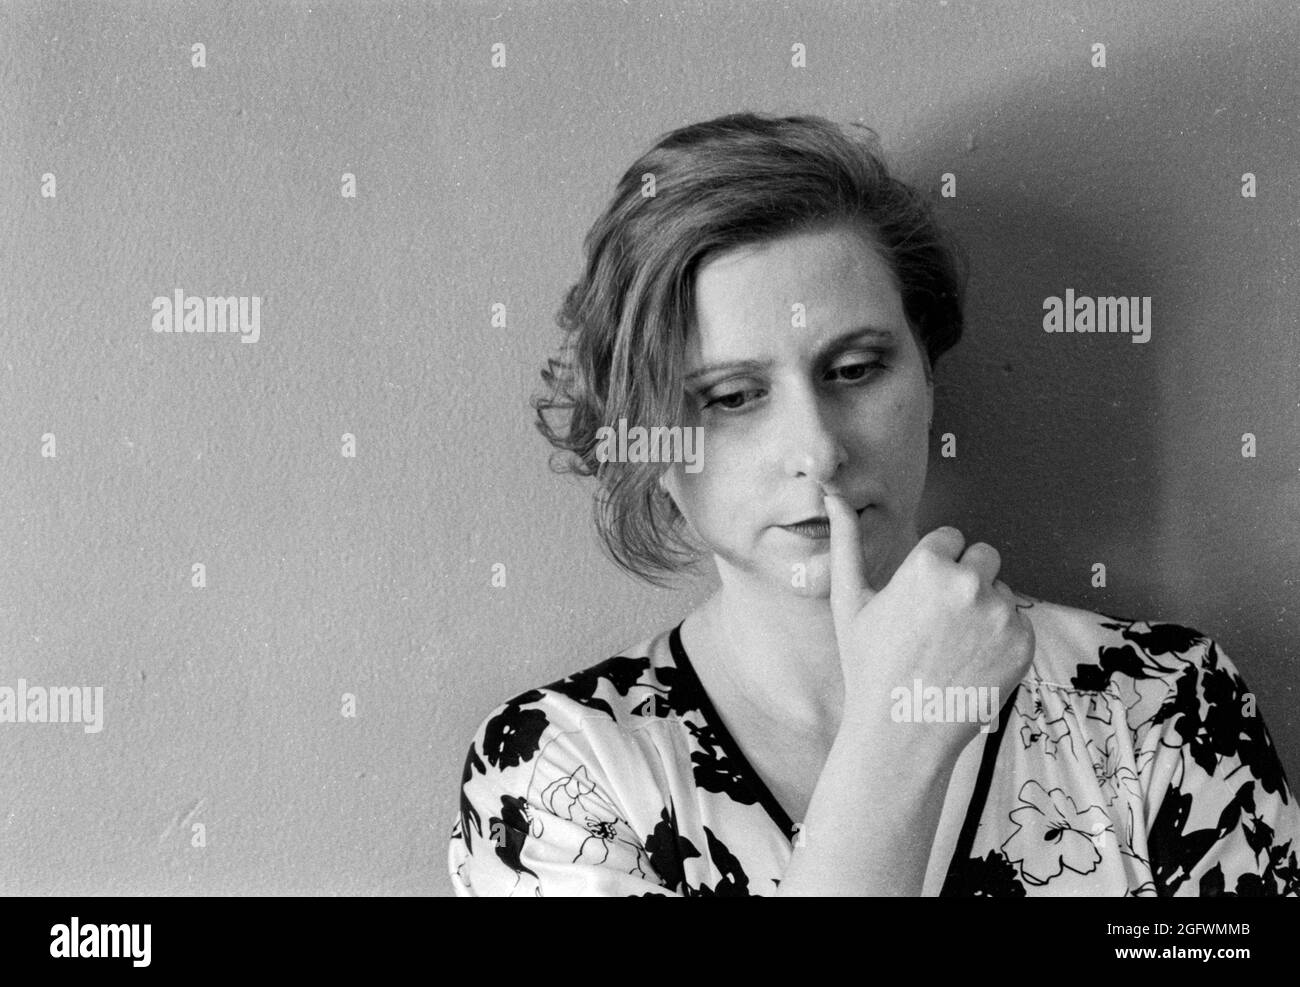 Tilburg, Netherlands. Studio Portrait of an adult, caucasian woman on analog black and white film. Stock Photo